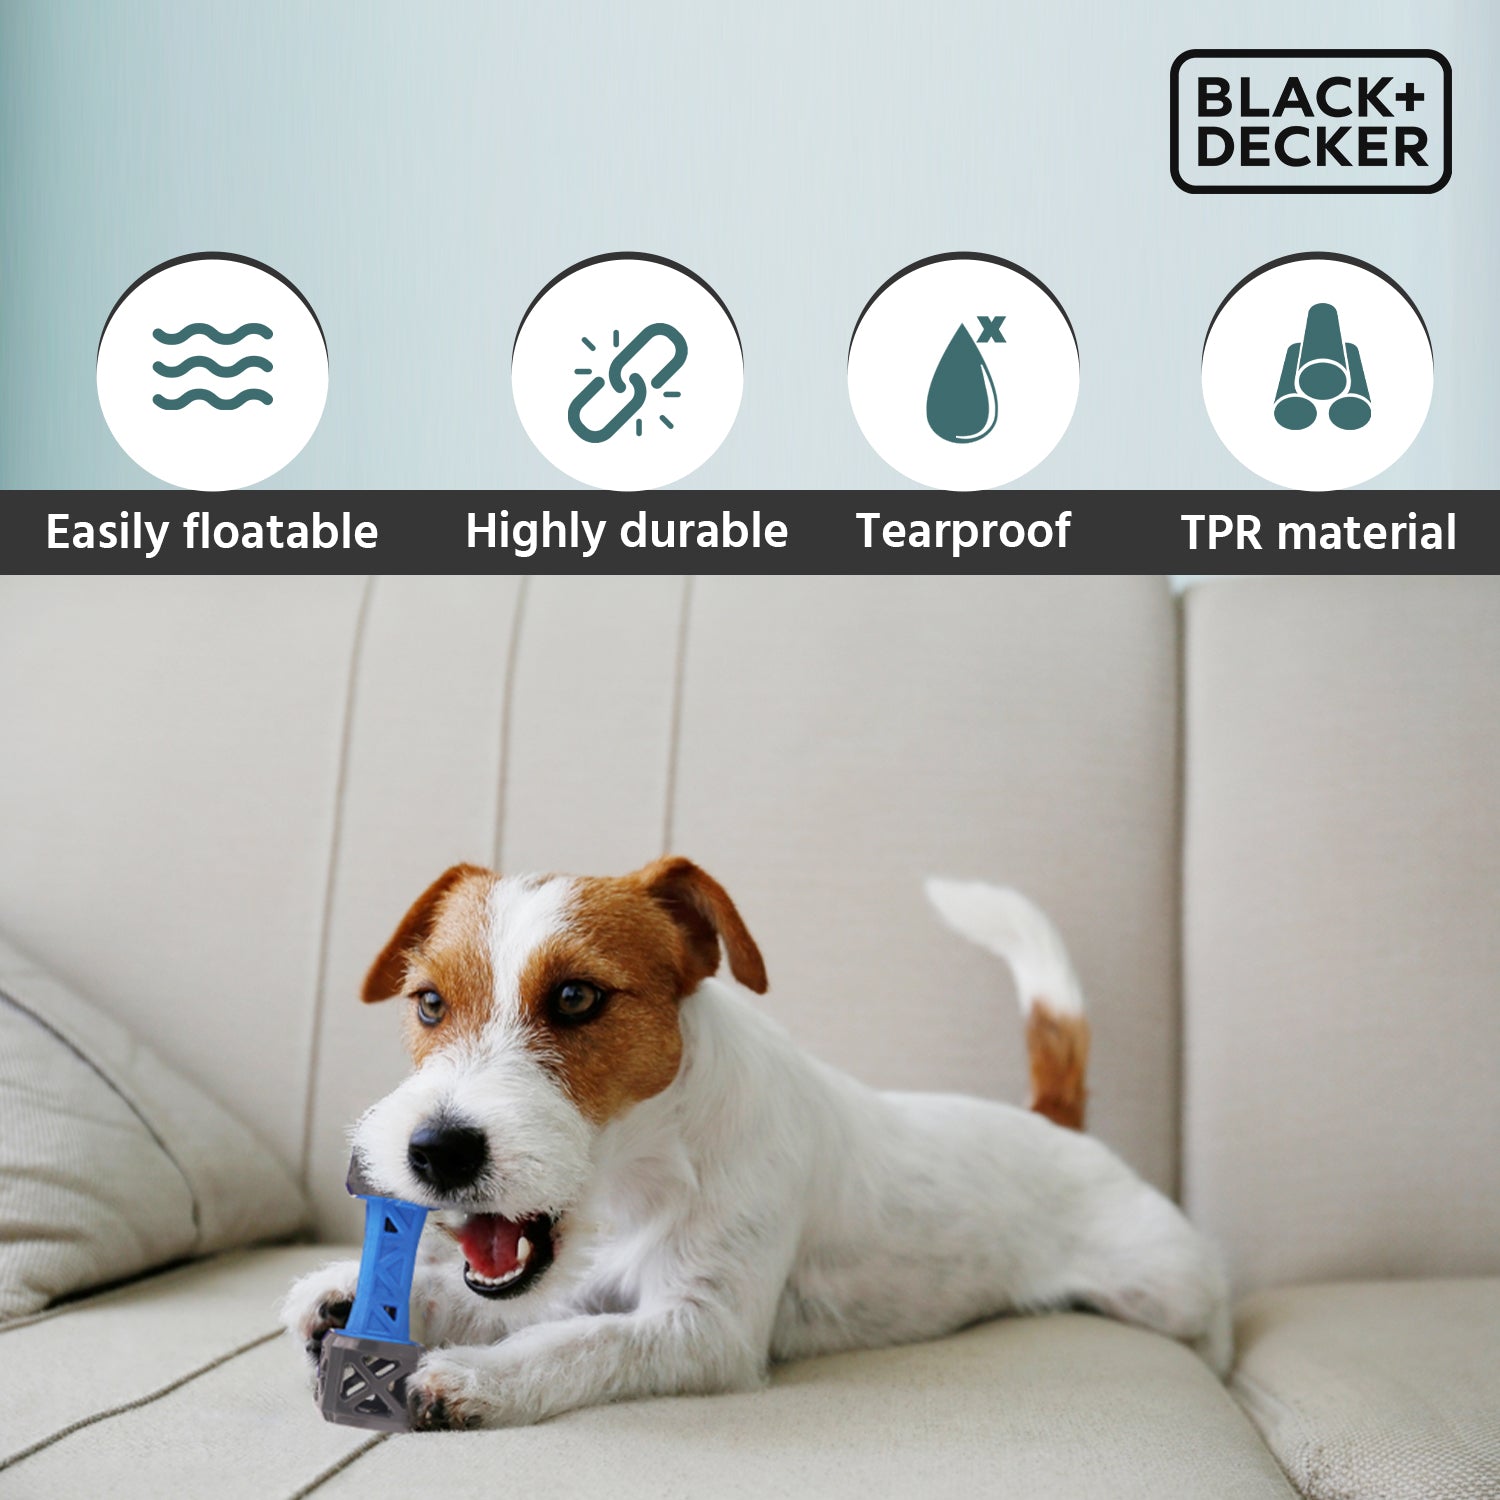 Black+Decker Crunchy, Treat Leak Floatable Dumbbell Interactive Toy For Dog_04